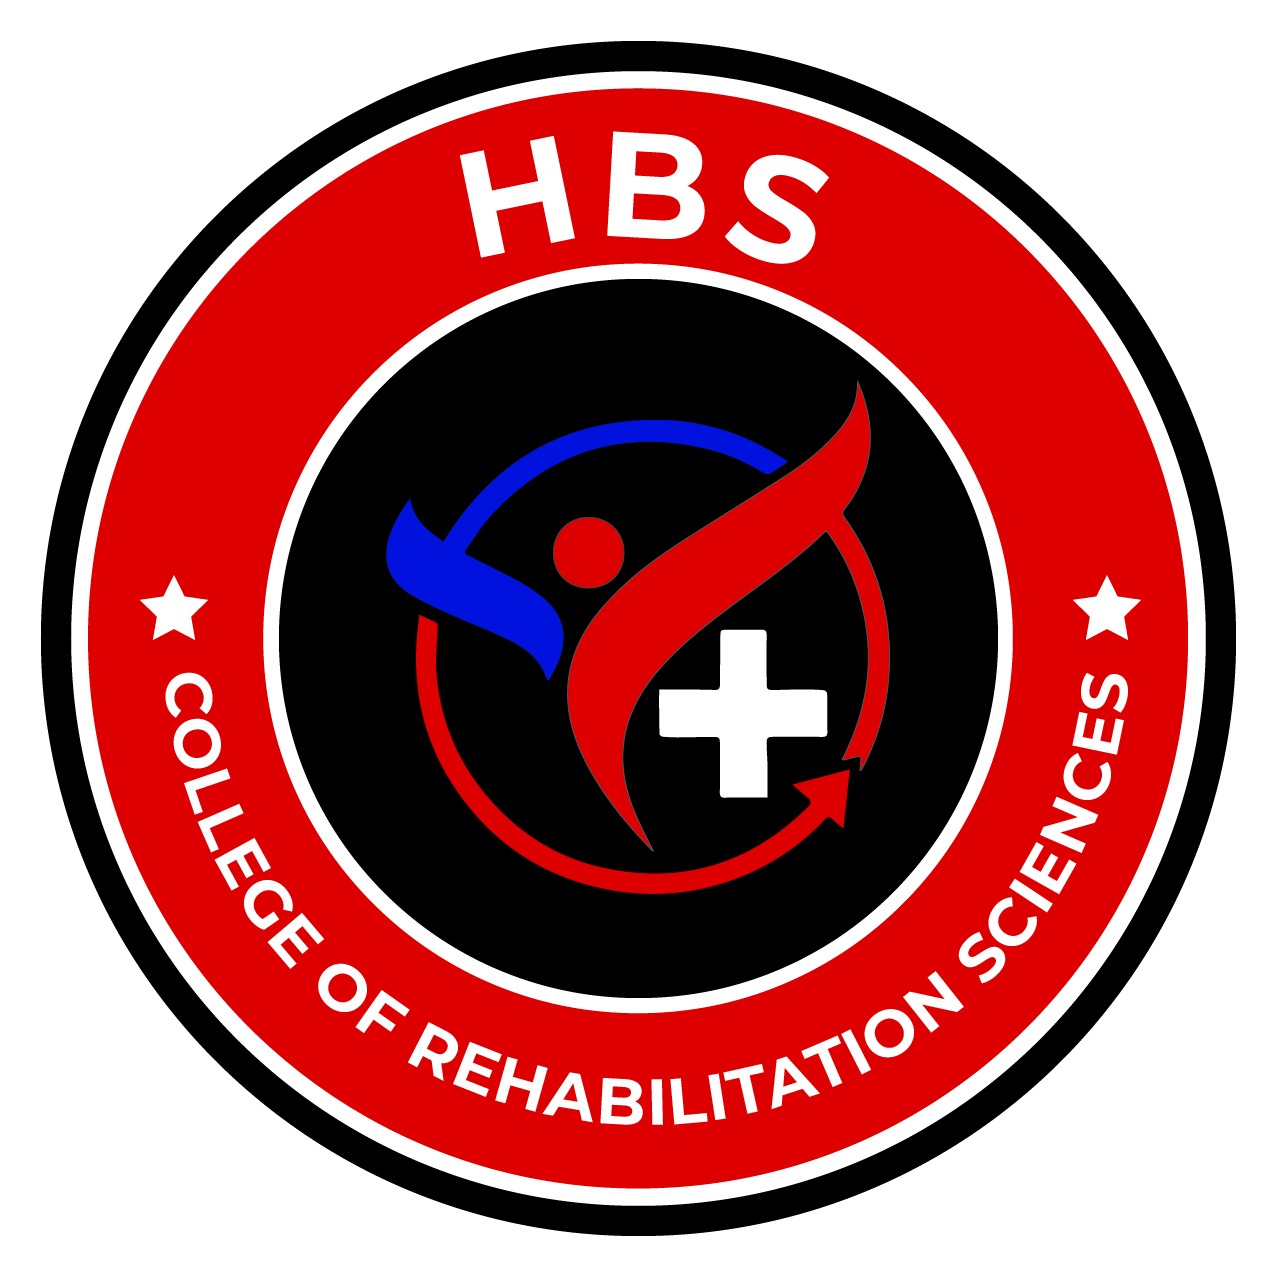 HBS College of Rehabilitation